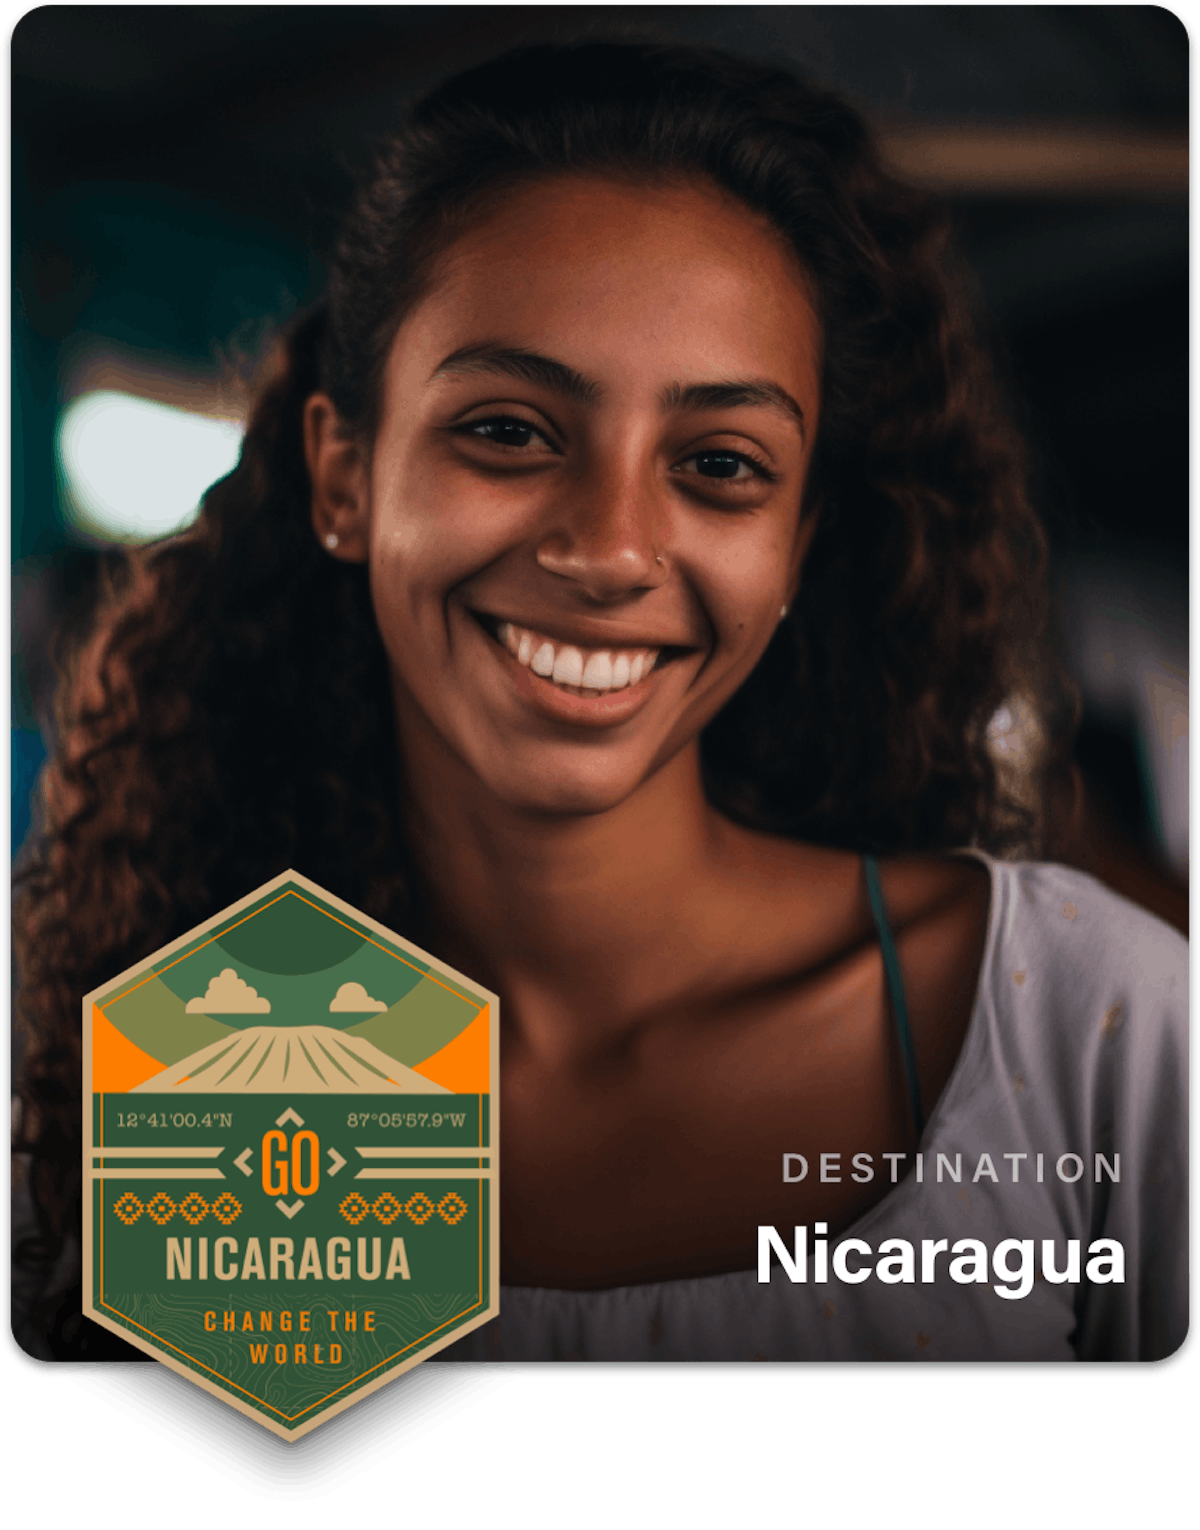 image of nicaragua destination card